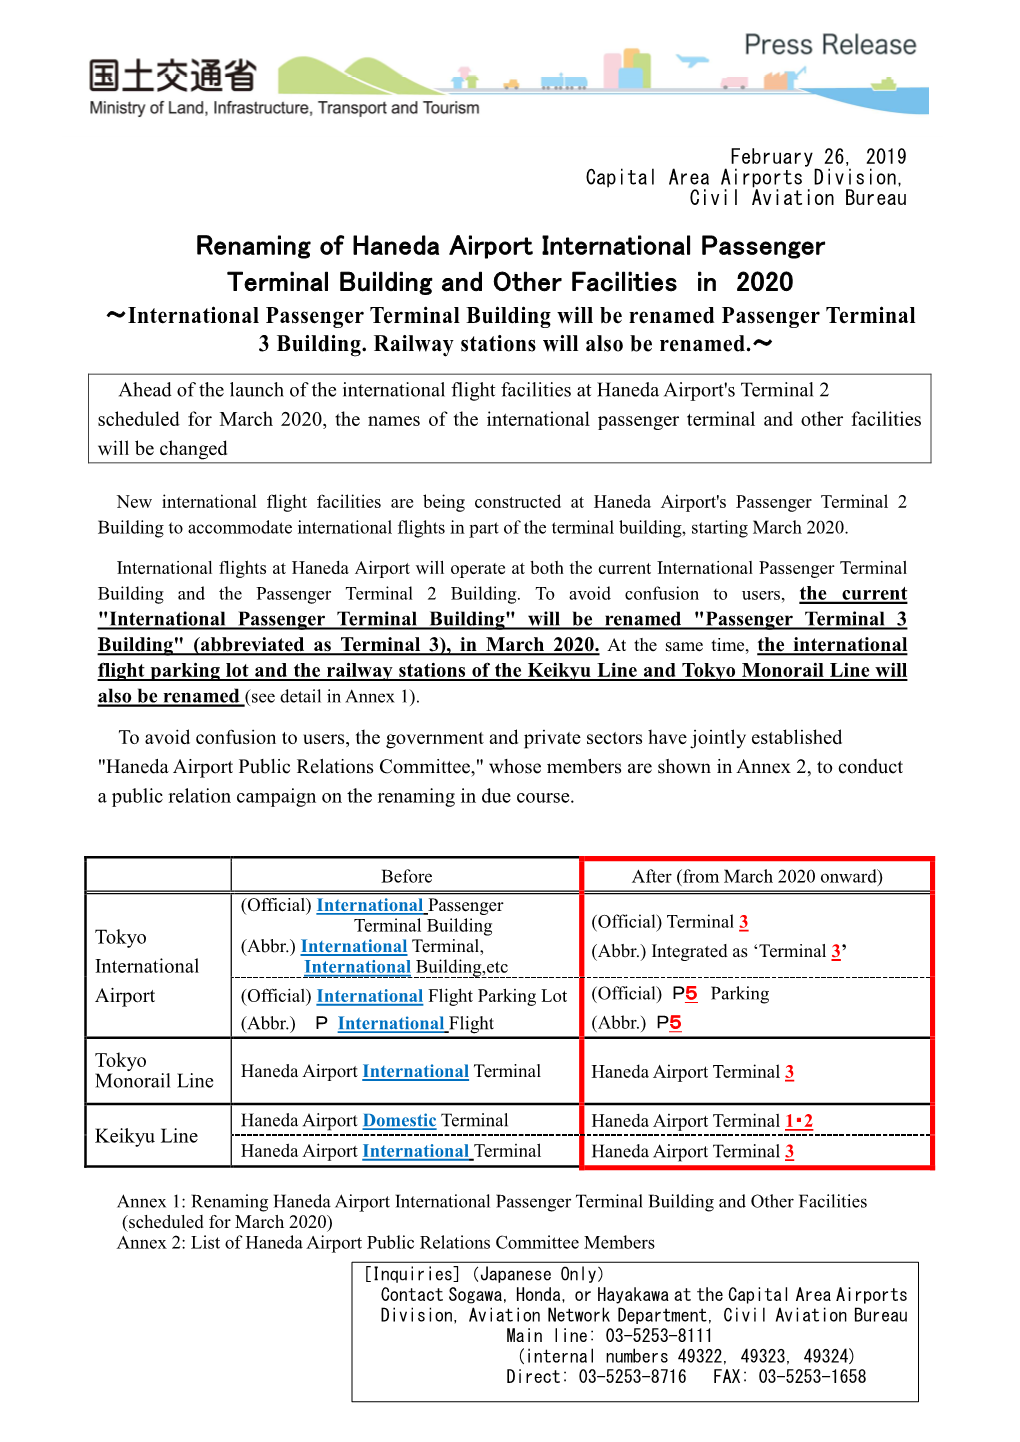 Renaming of Haneda Airport International Passenger Terminal